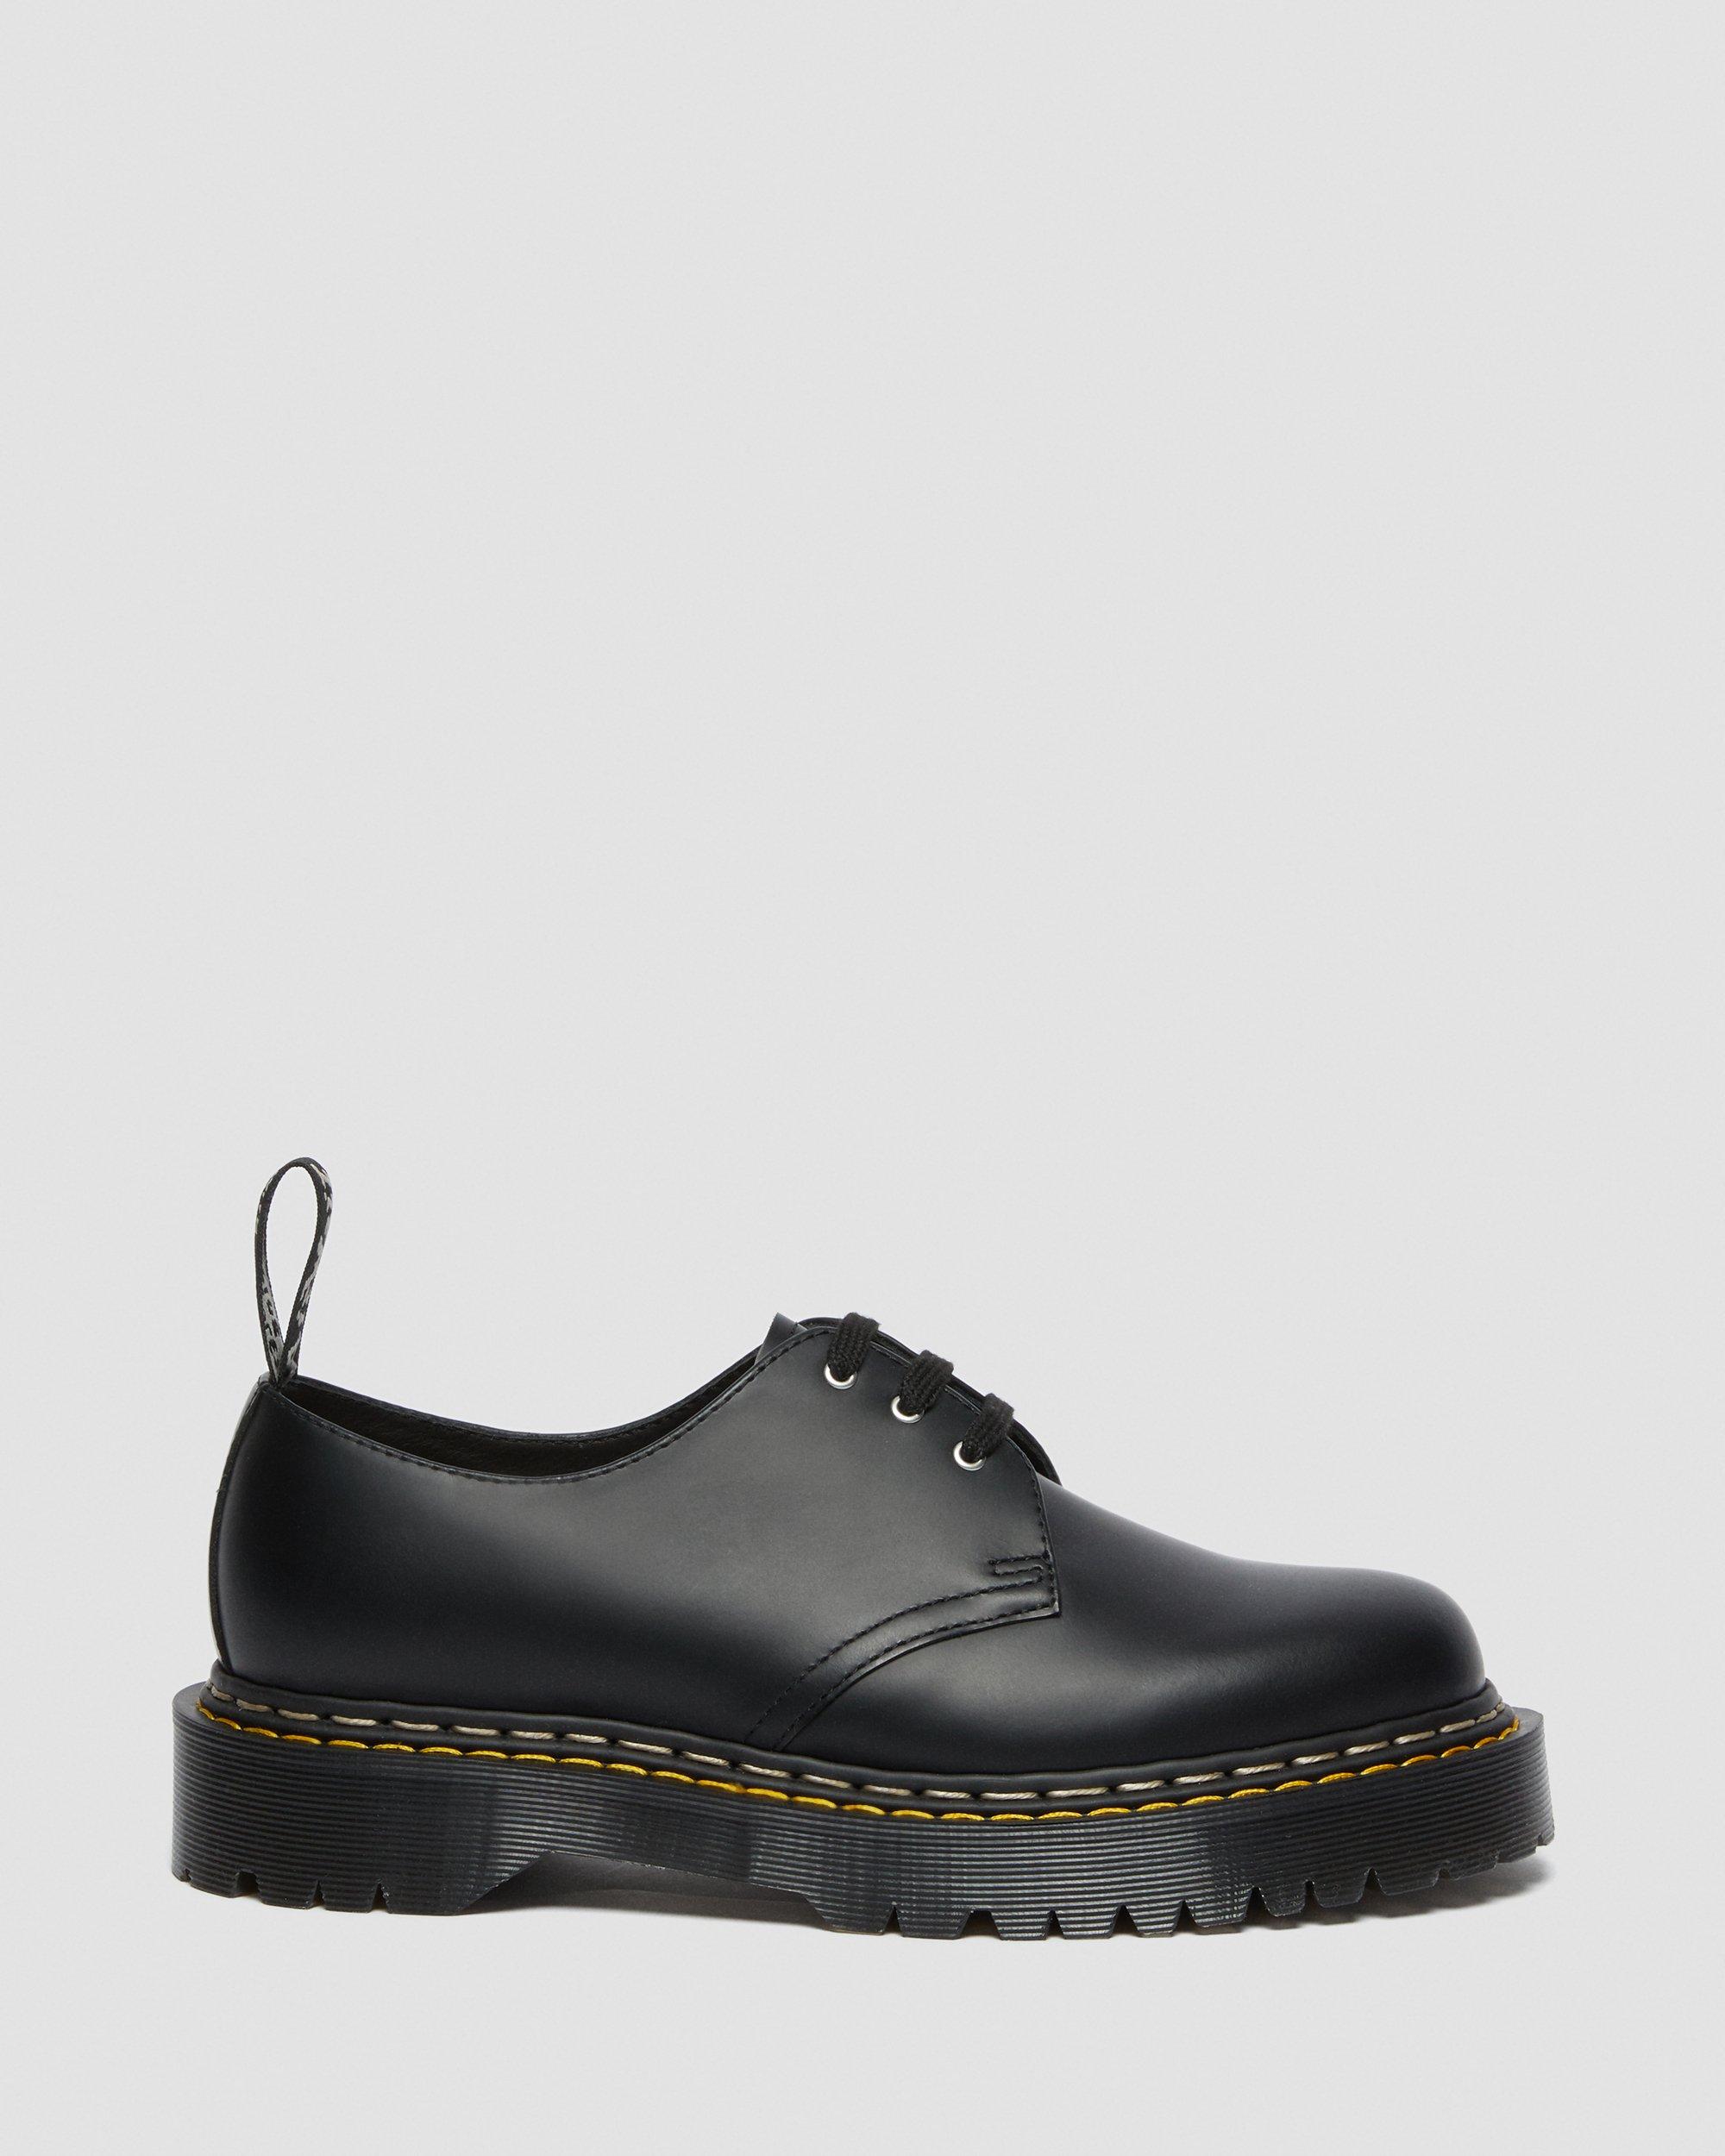 DR MARTENS 1461 Rick Owens Bex Leather Oxford Shoes